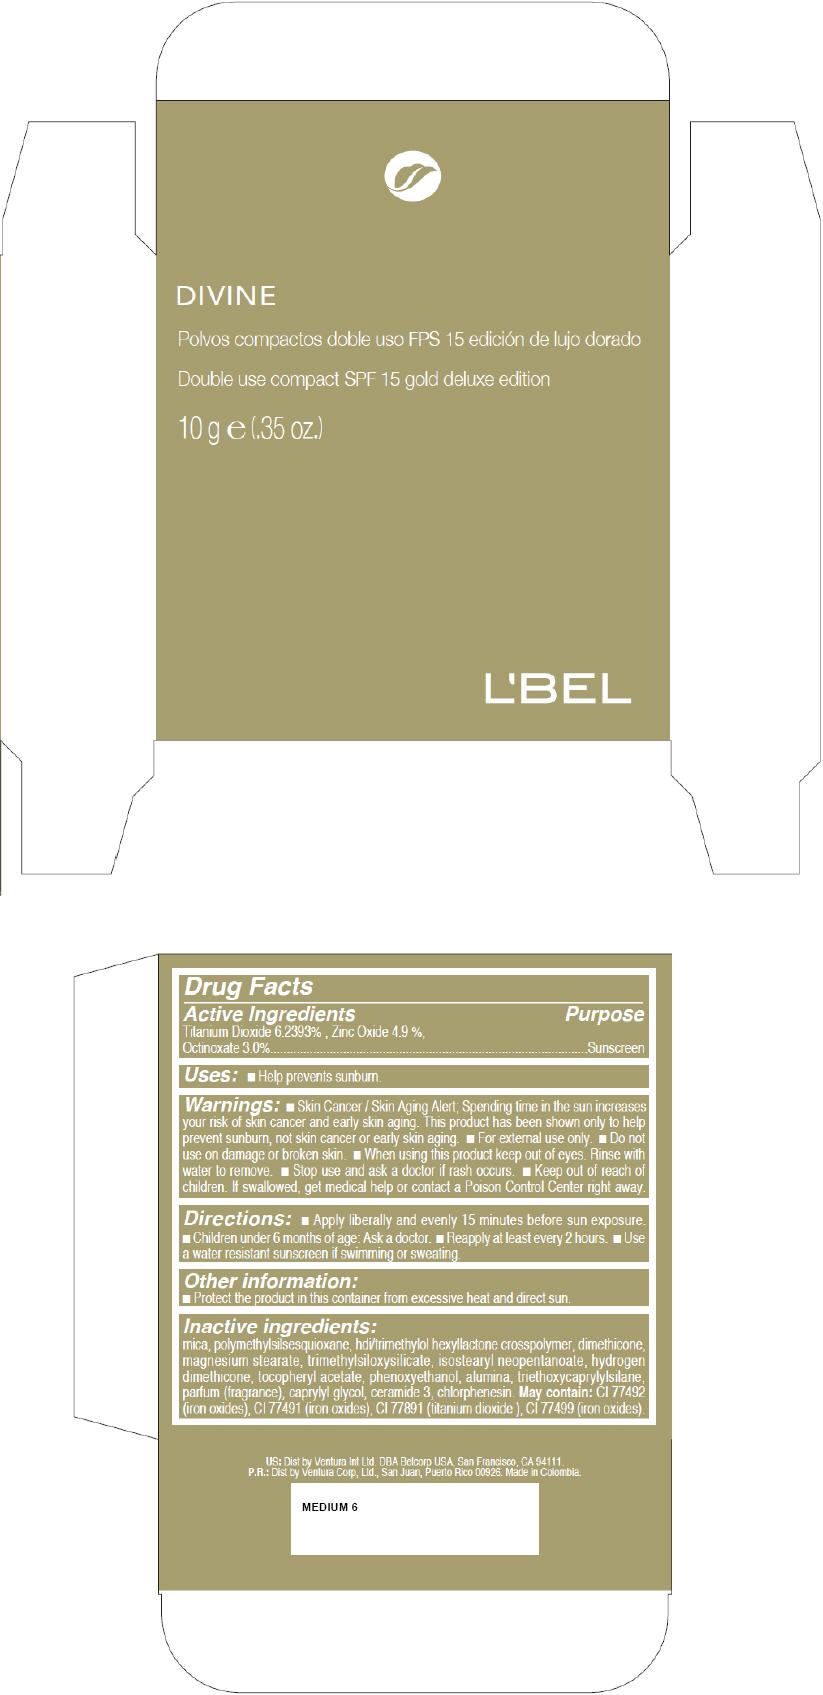 PRINCIPAL DISPLAY PANEL - 10 g Cartridge Box - Medium 6